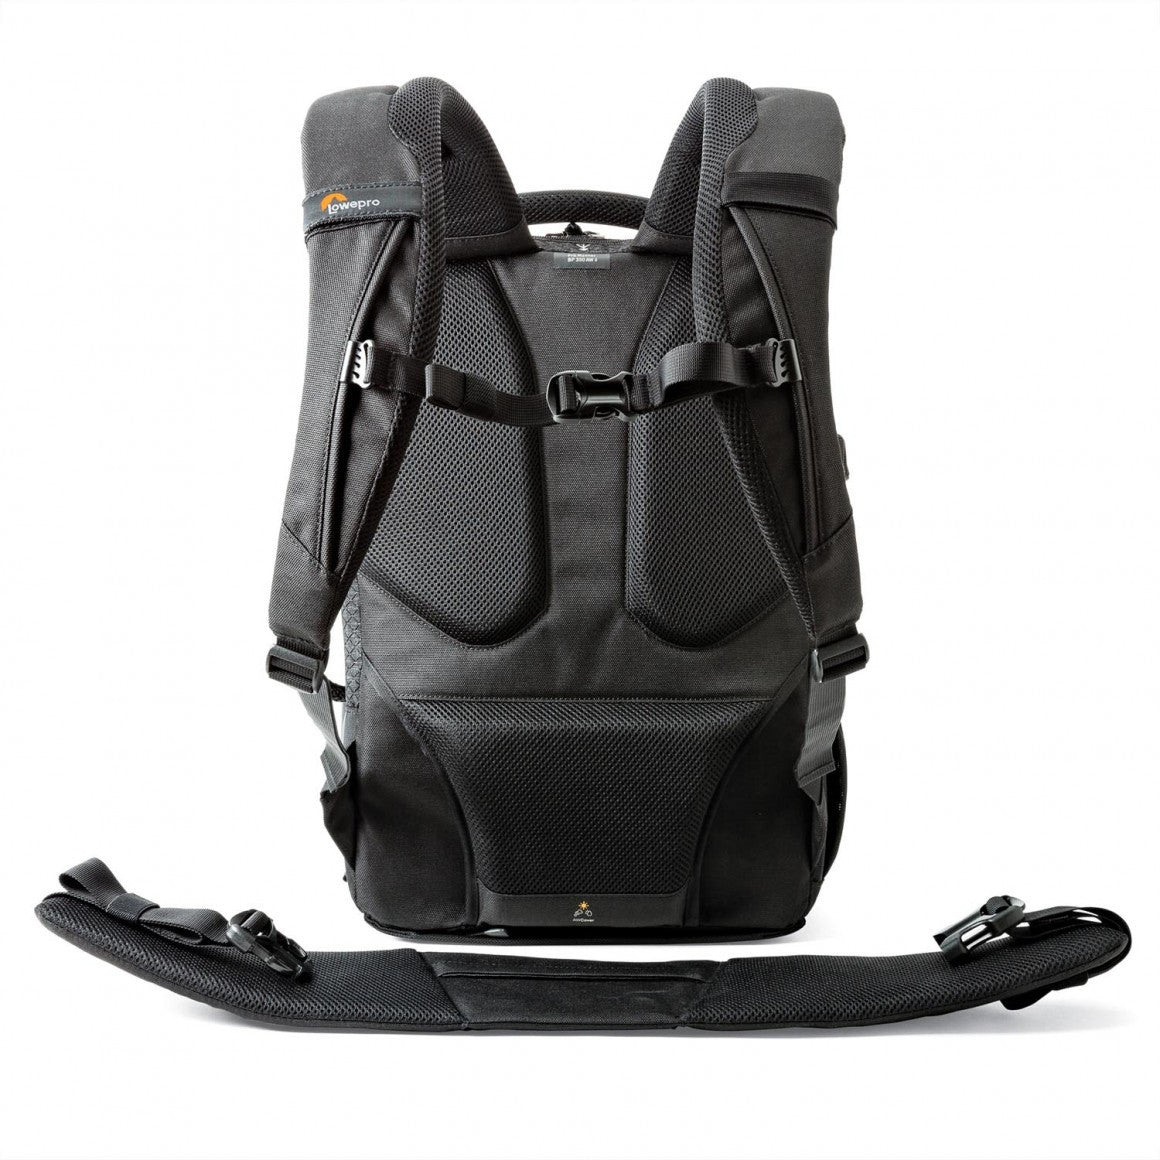 Lowepro Pro Runner 350 AW II Backpack (Black), bags backpacks, Lowepro - Pictureline  - 3